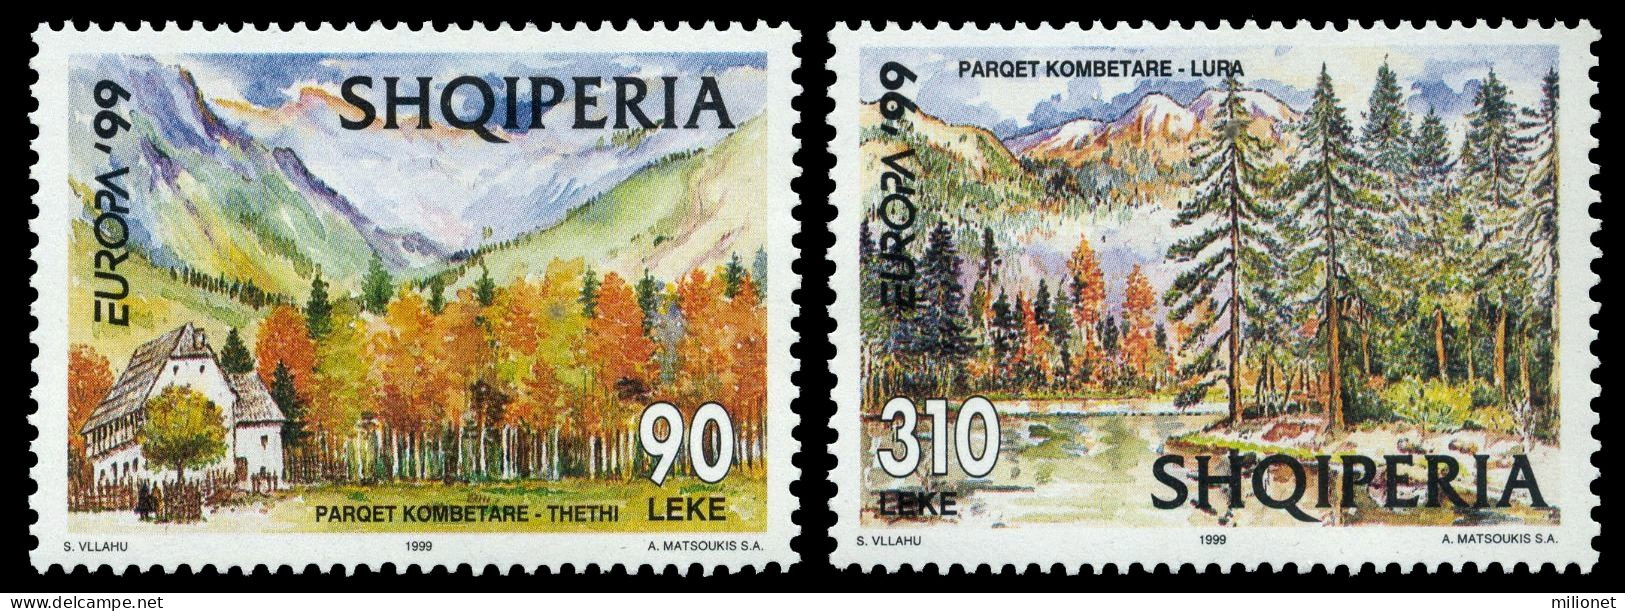 SALE!!! Albania Albanie Albanien 1999 EUROPA CEPT National Reserves & Parks 2 Stamps Set MNH ** - 1999